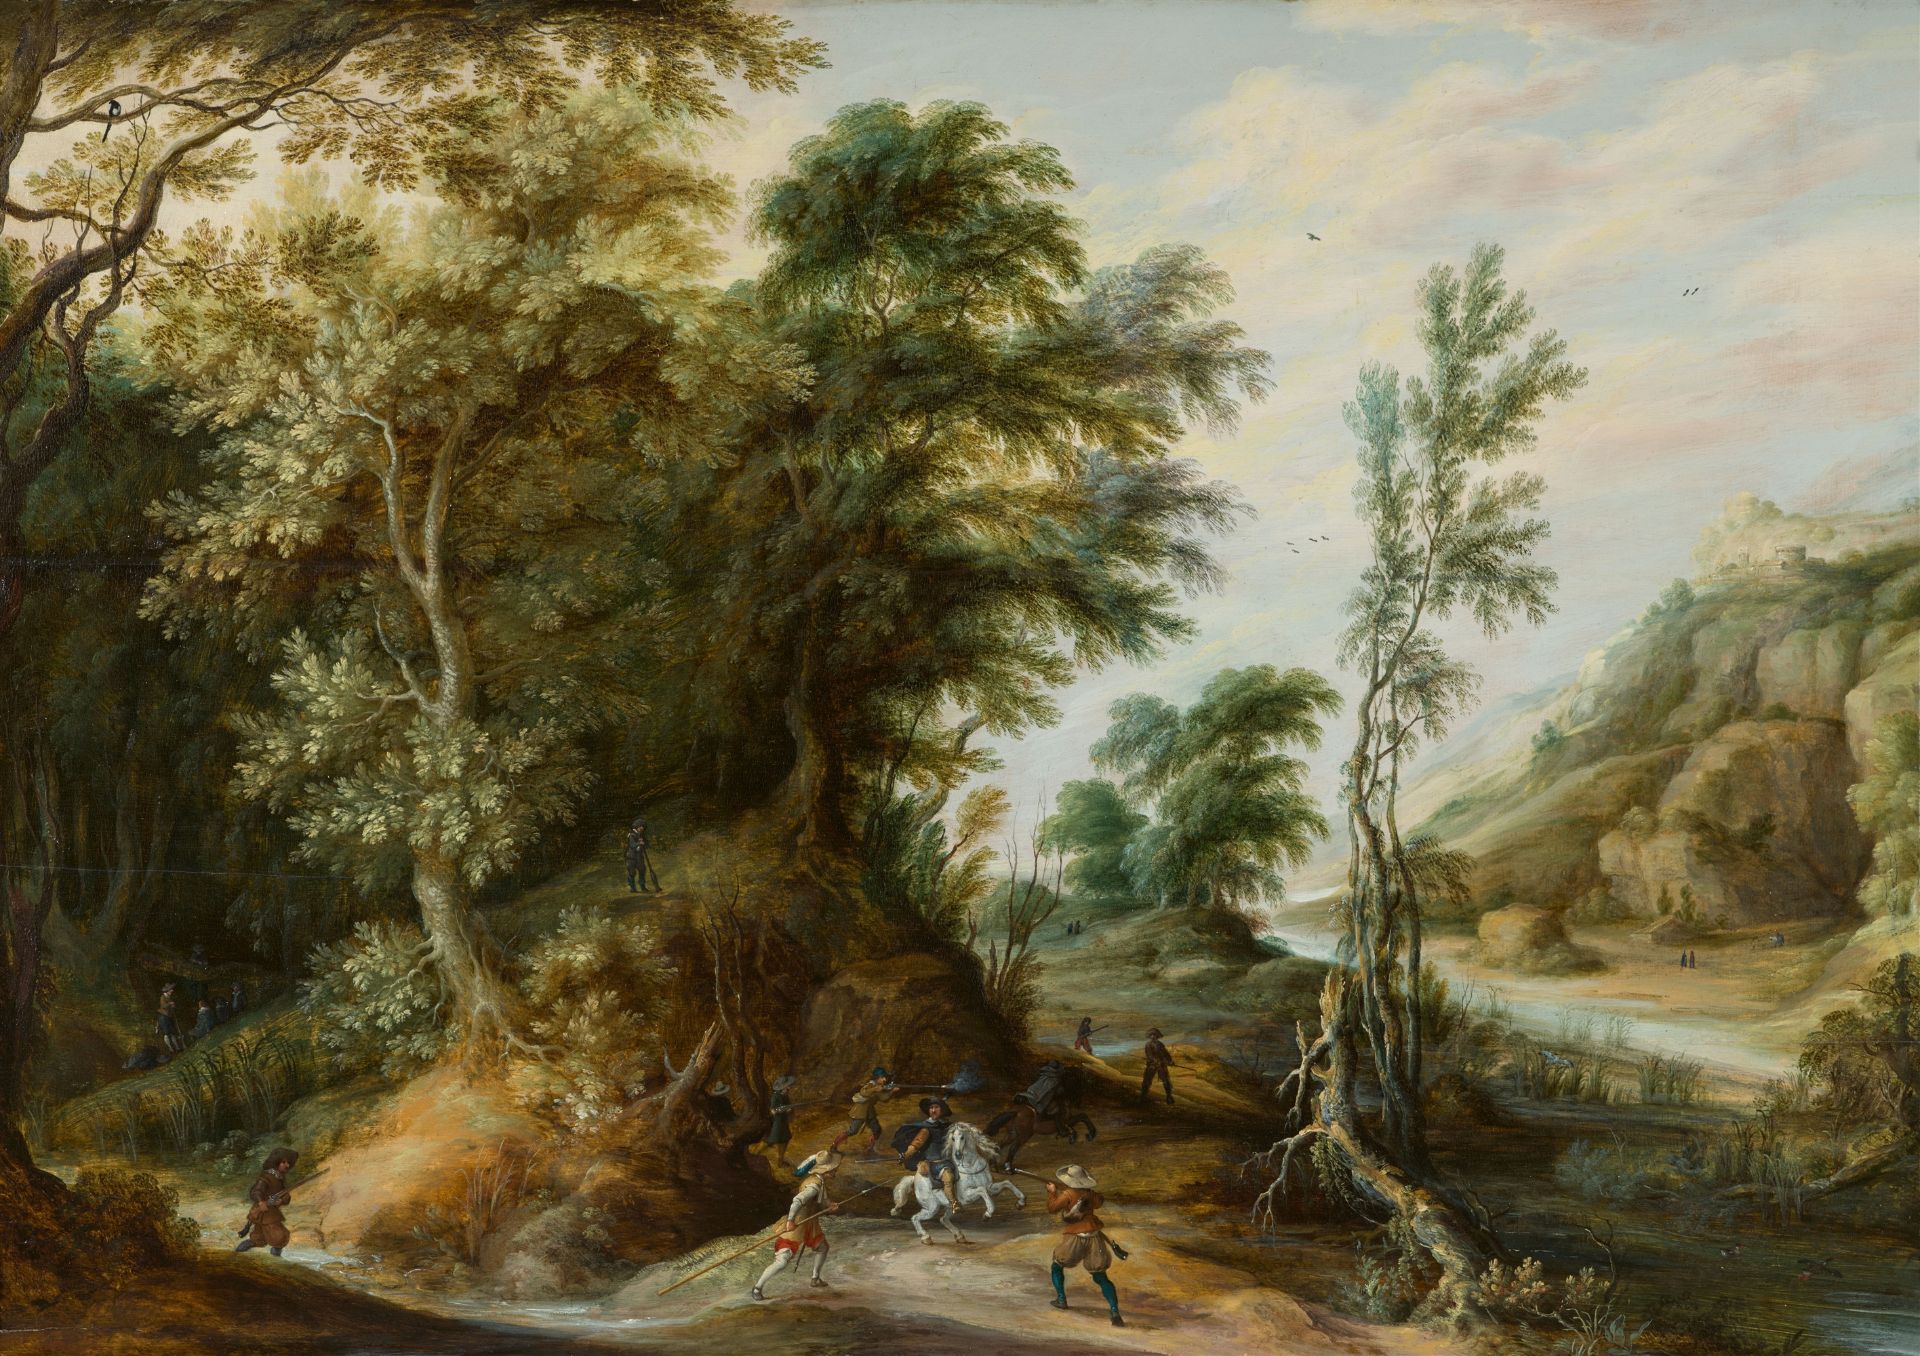 Alexander Keirincx, Landscape with a Robbery Scene